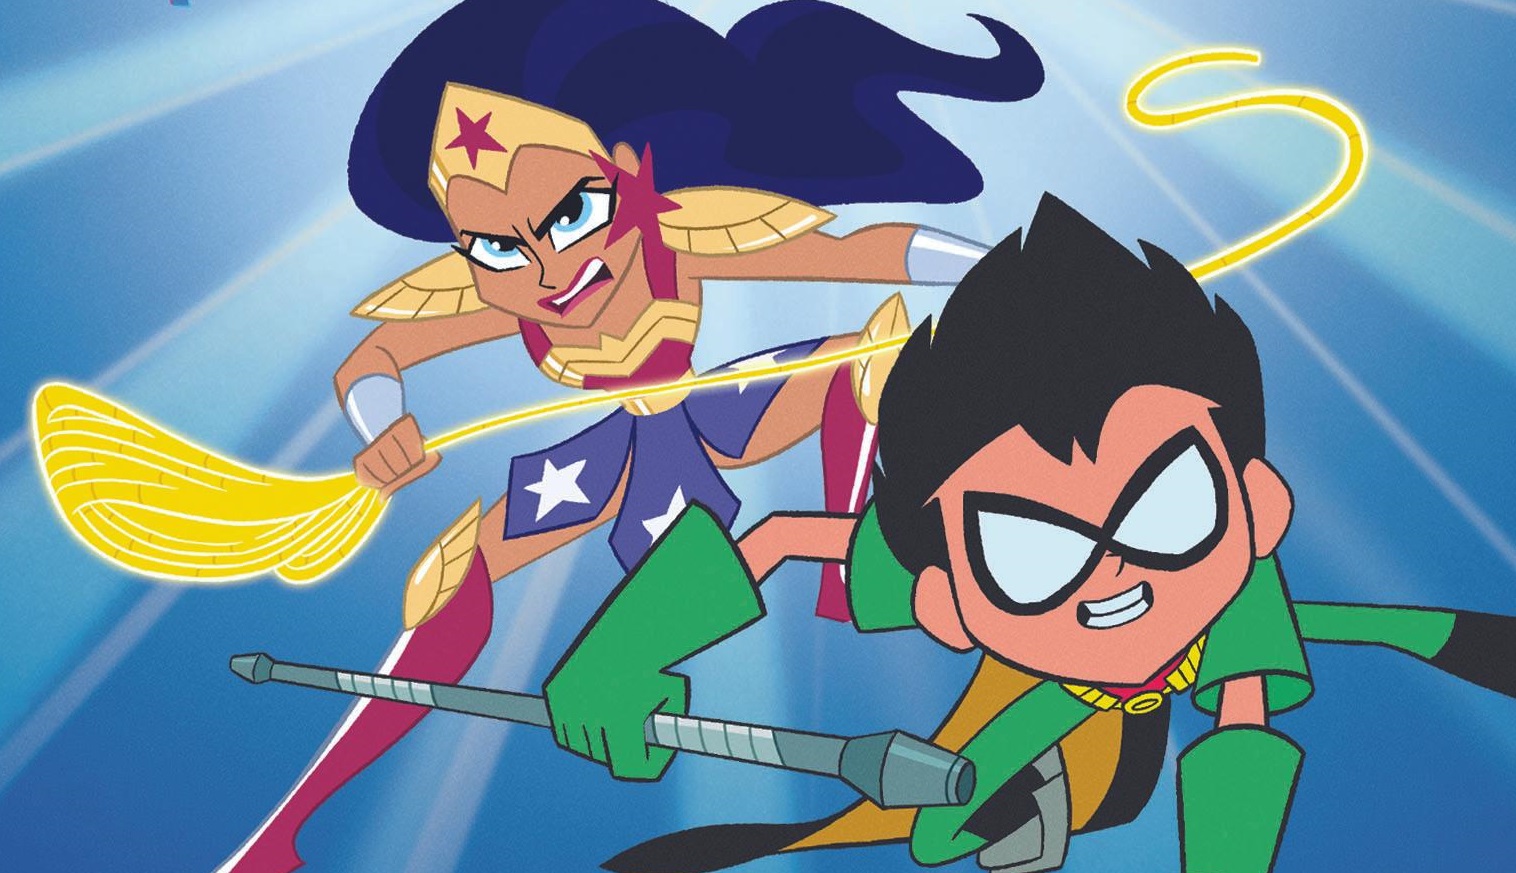 Teen Titans Go! & DC Super Hero Girls battle MAYHEM IN THE MULTIVERSE in  new crossover animated film